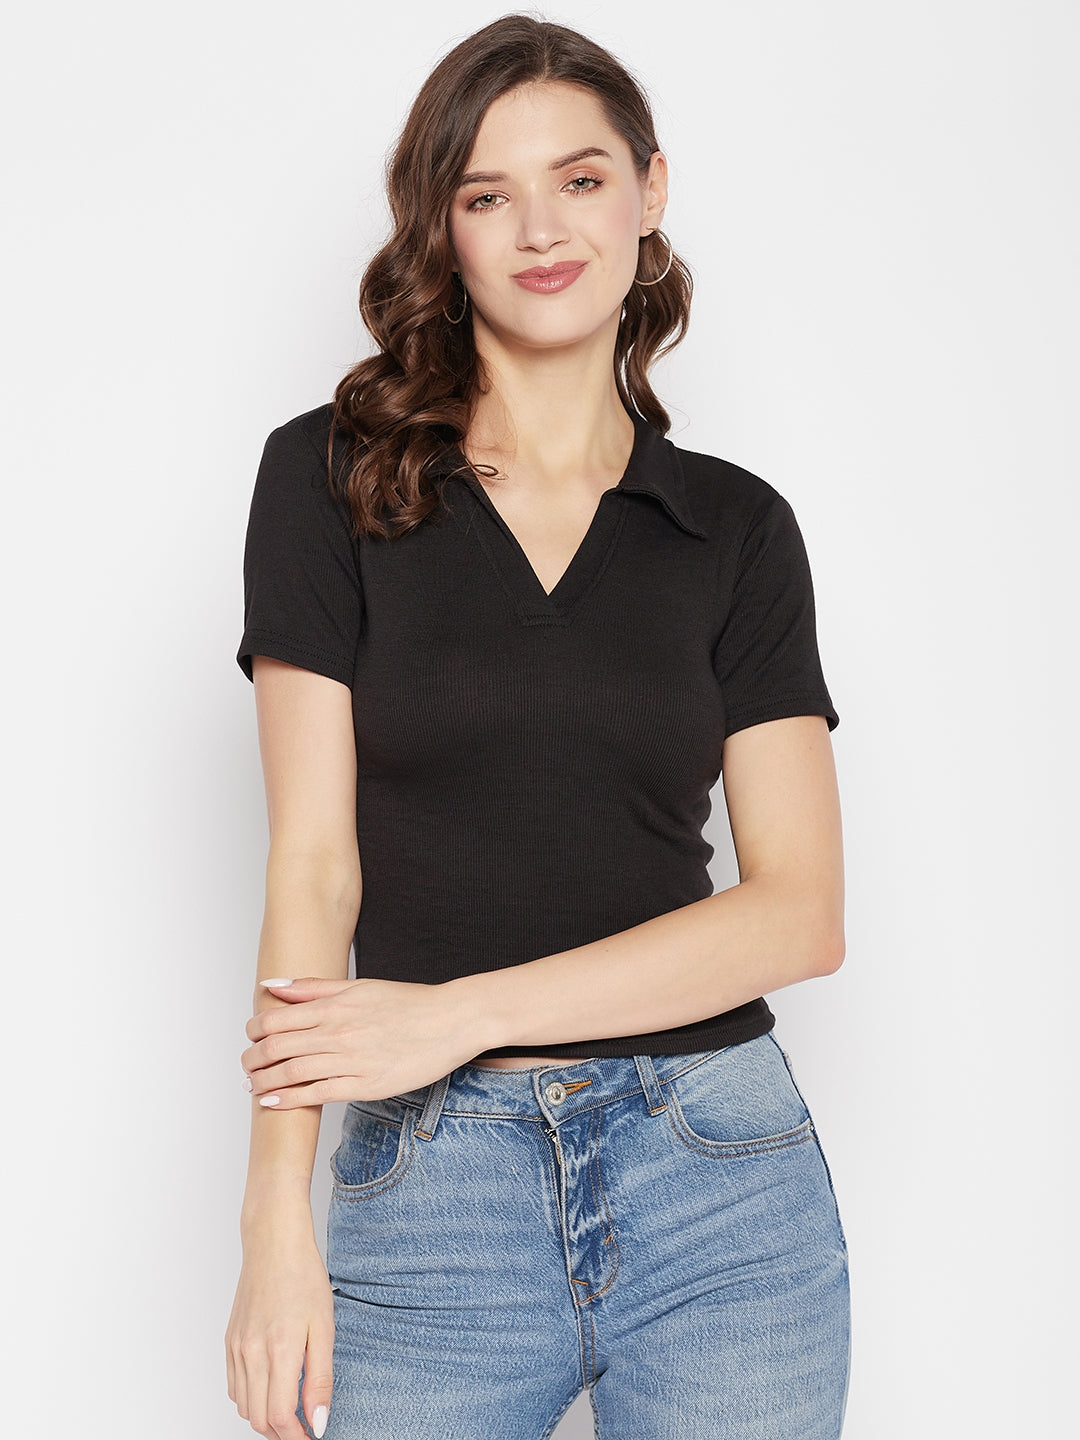 Clora Black Solid Shirt Collar Crop Top